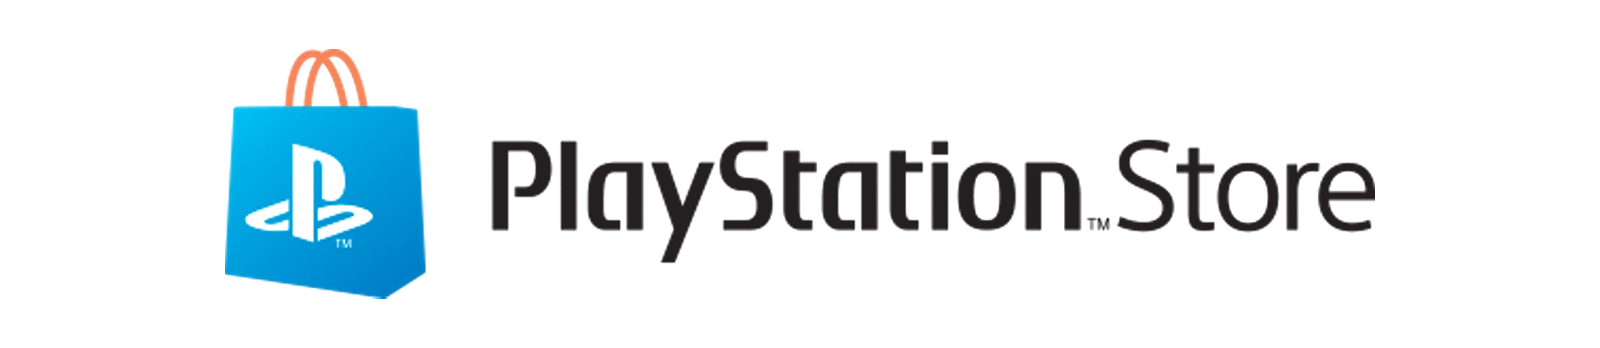 PlayStation Store PNG Logo